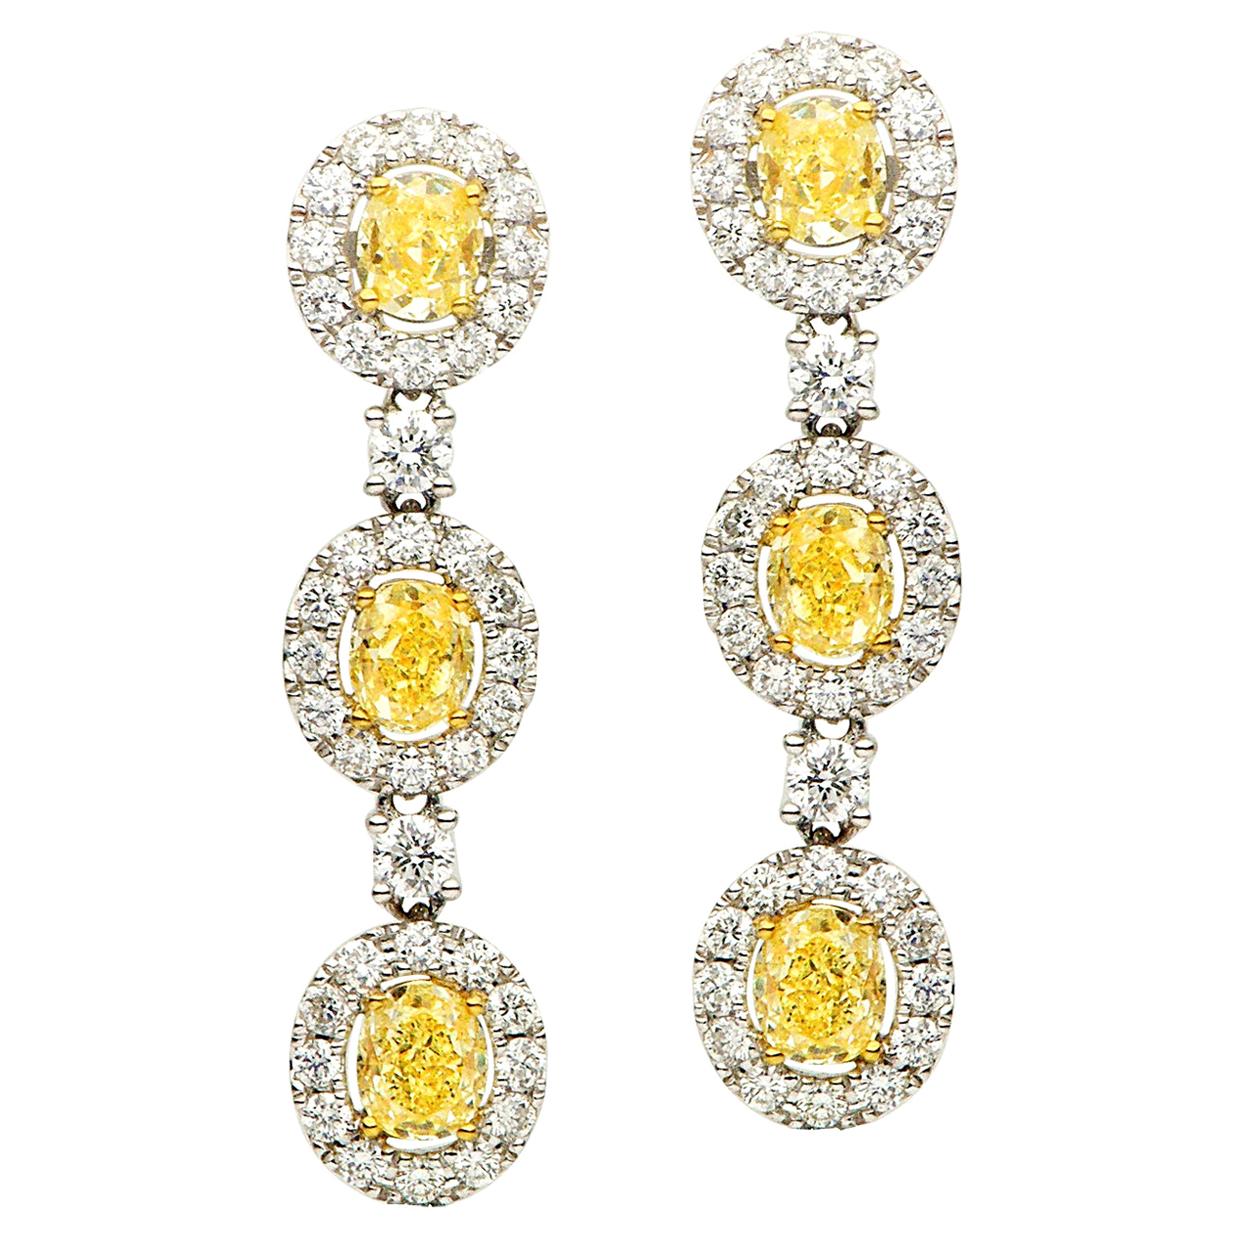 Oval Yellow Diamonds with Diamond Halo Triple Stacked Earrings